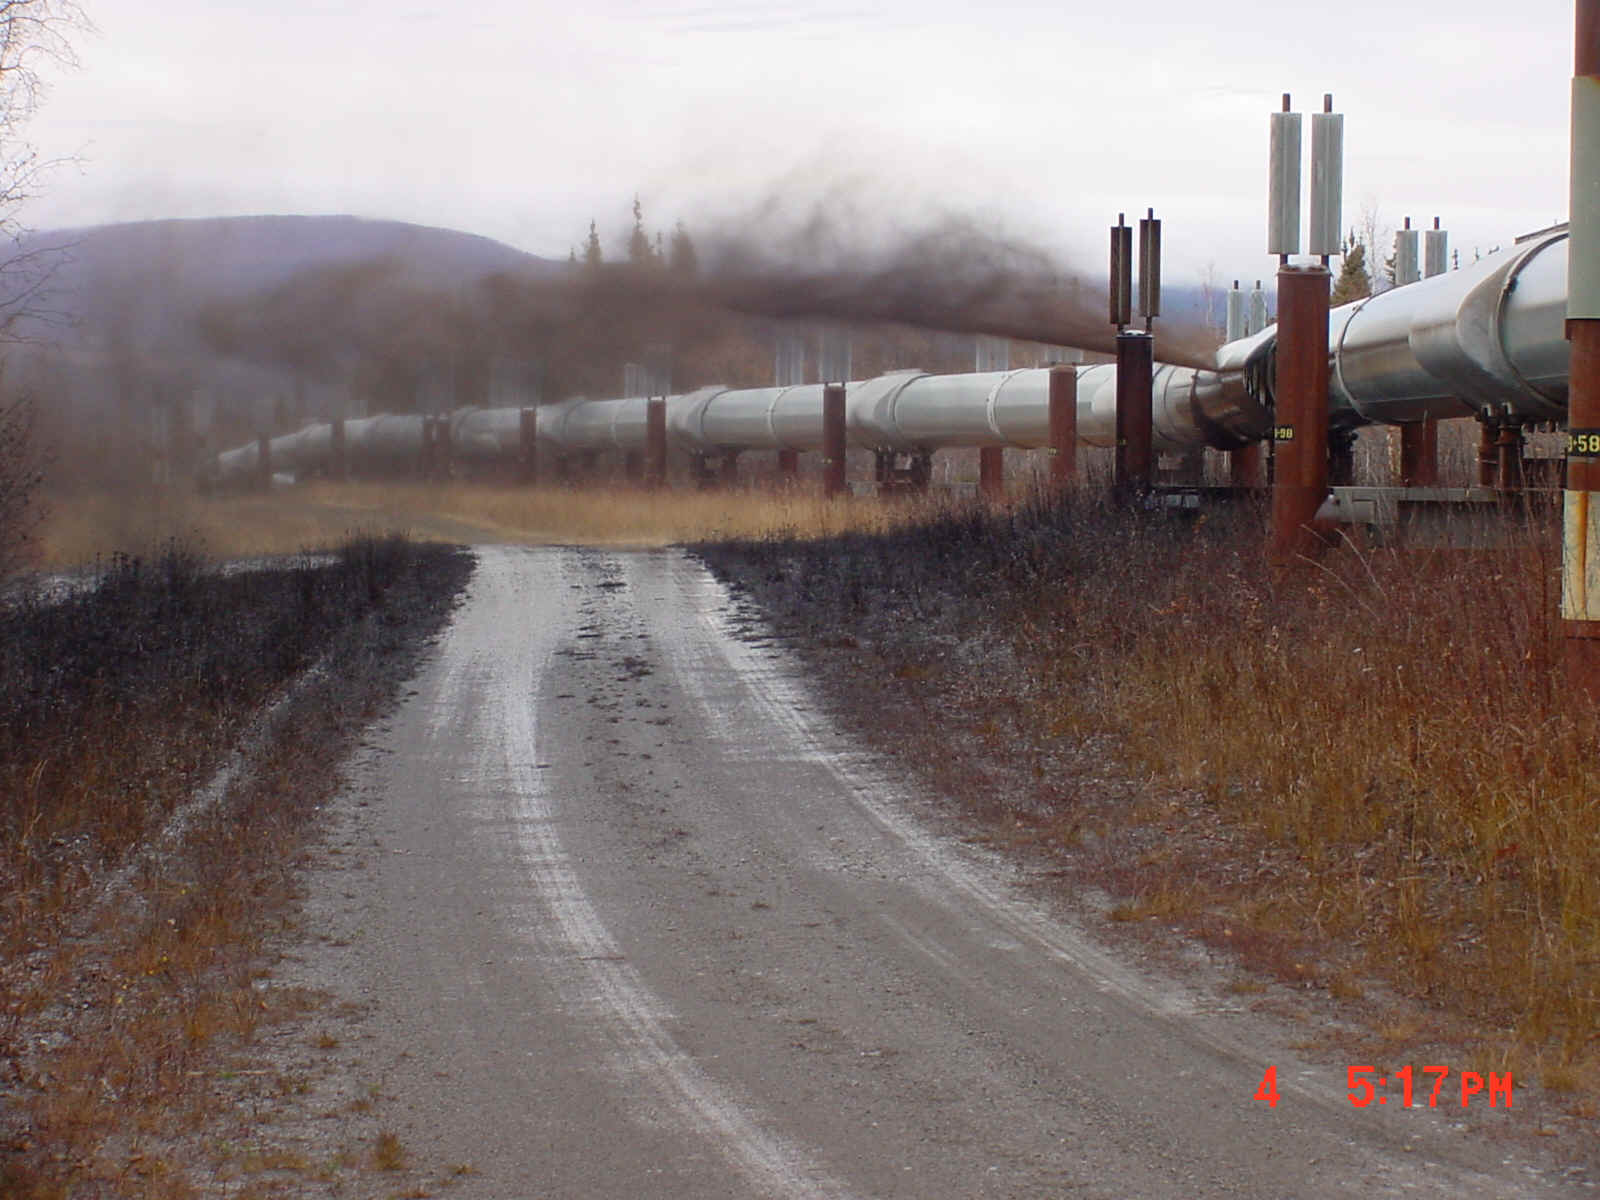 Trans-Alaska Pipeline Shot By A Drunk